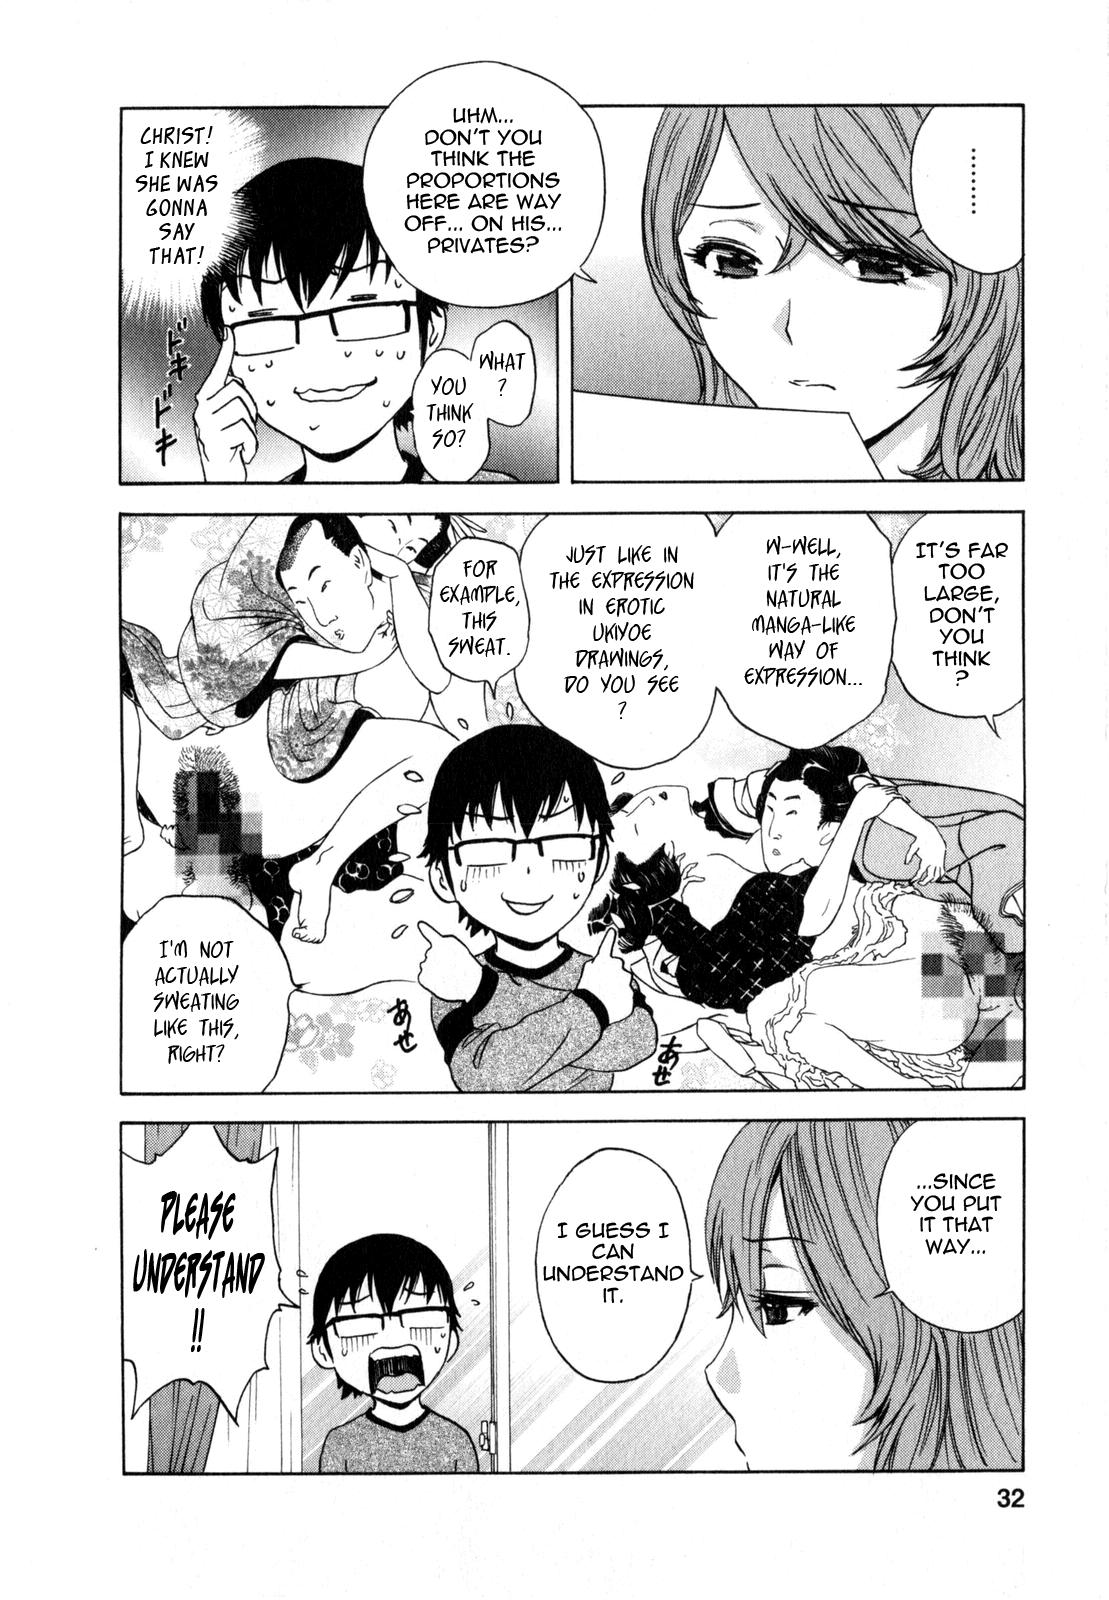 [Hidemaru] Life with Married Women Just Like a Manga 2 - Ch. 1-3 [English] {Tadanohito} 32